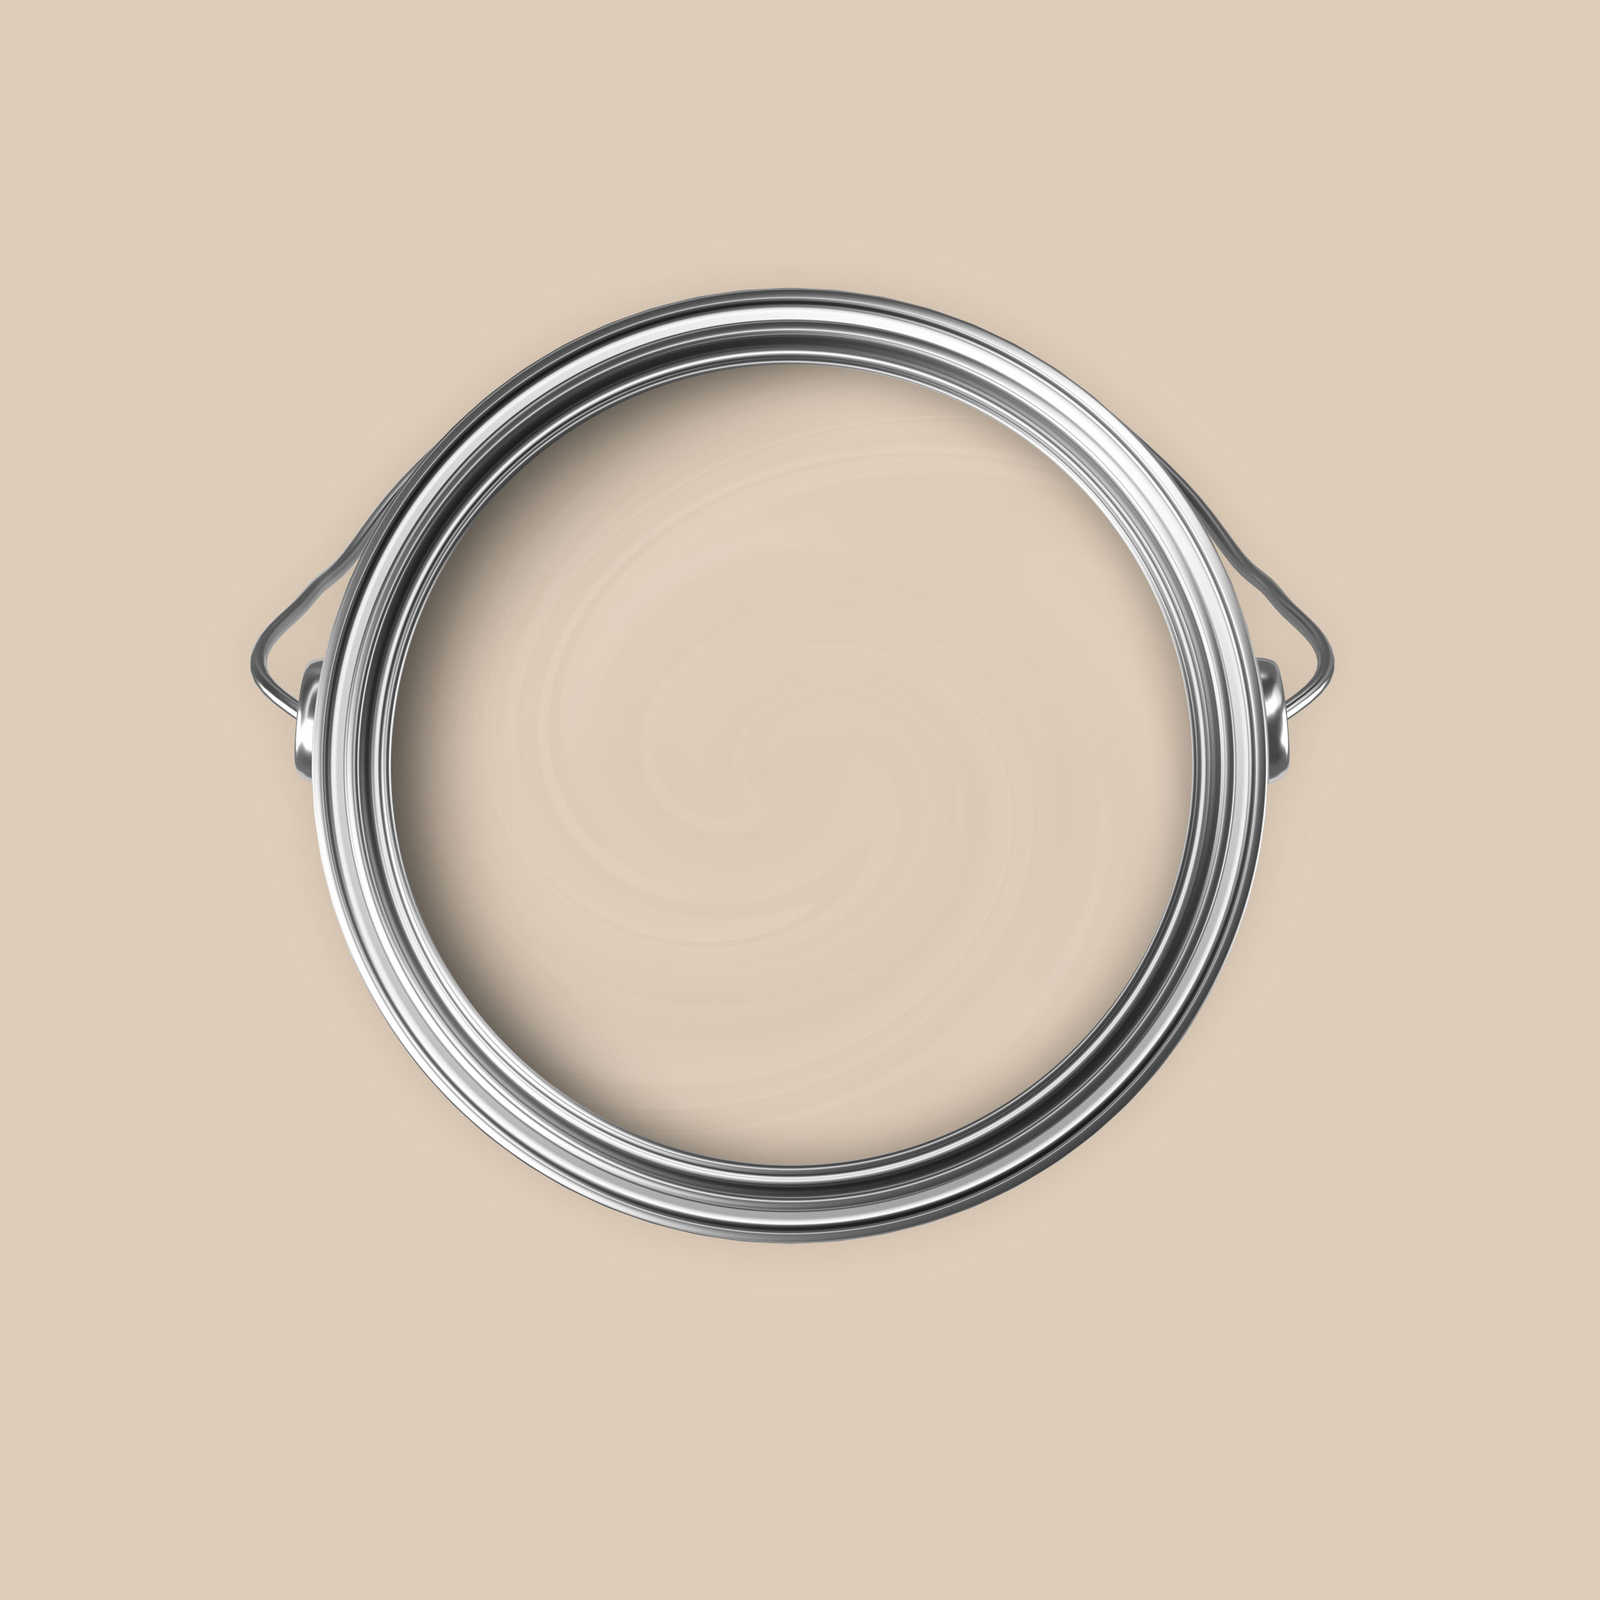             Premium Muurverf cosy light beige »Modern Mud« NW714 – 5 liter
        